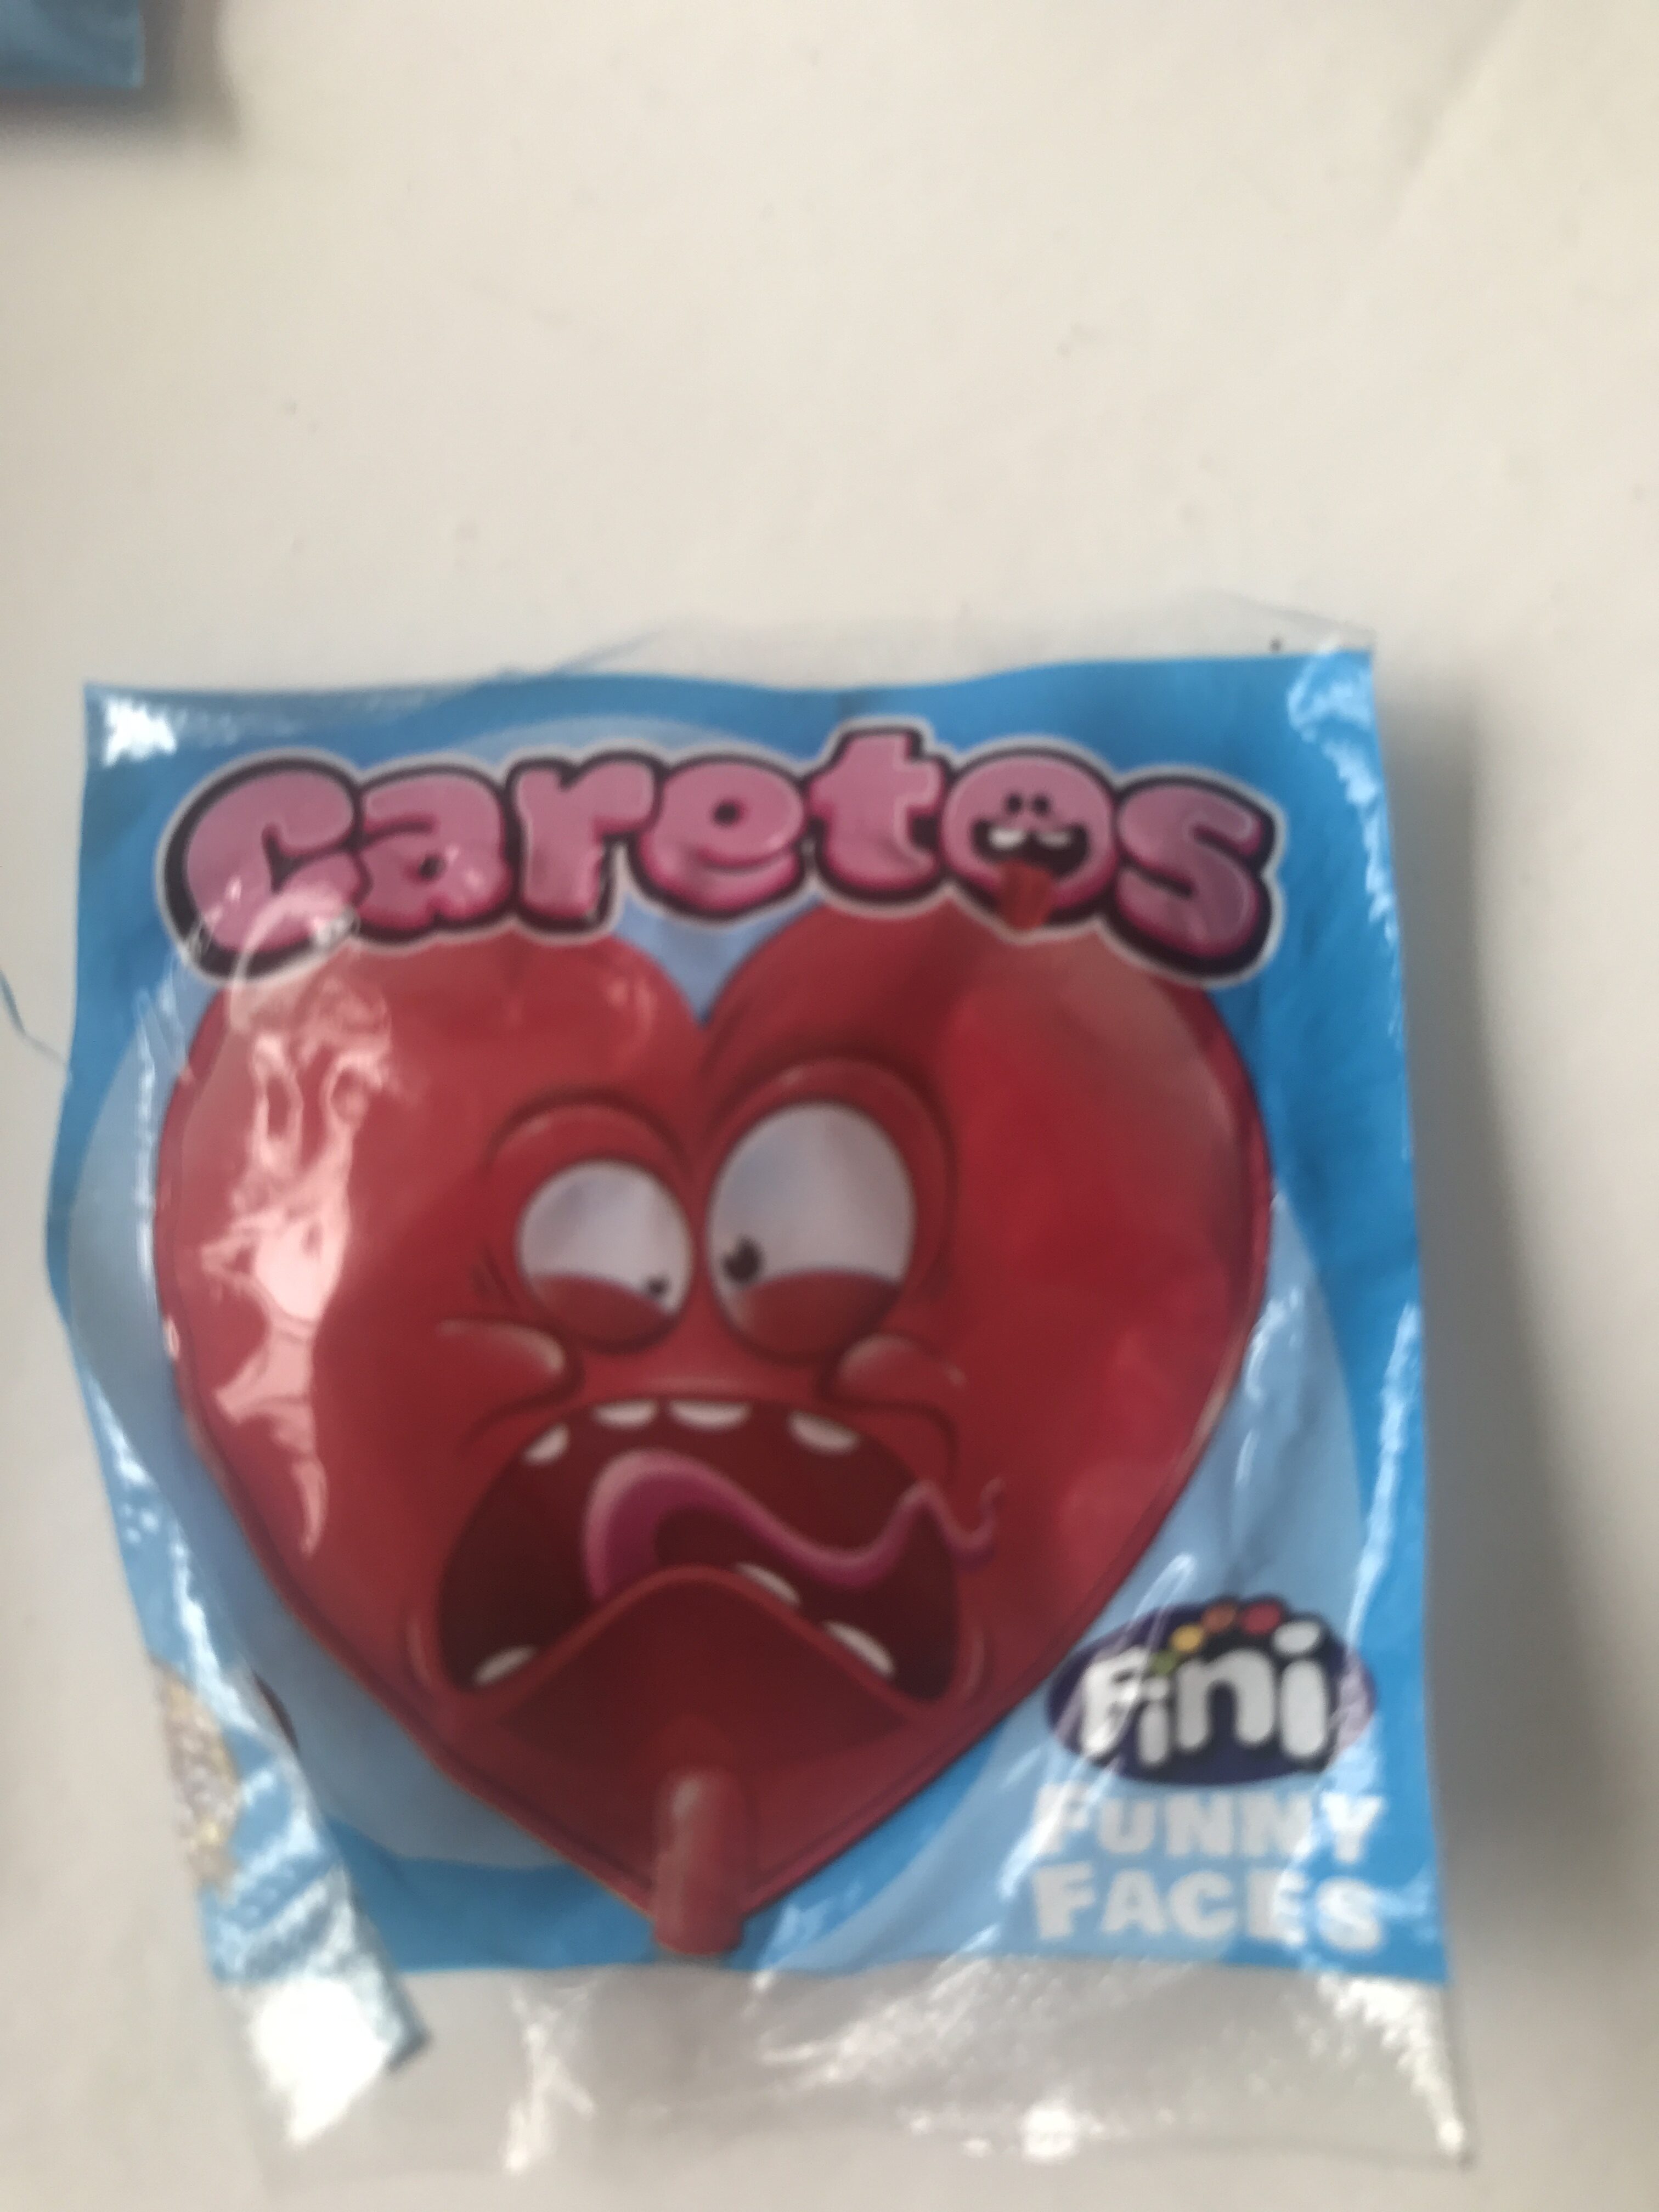 Caretos funny faces - Tableau nutritionnel